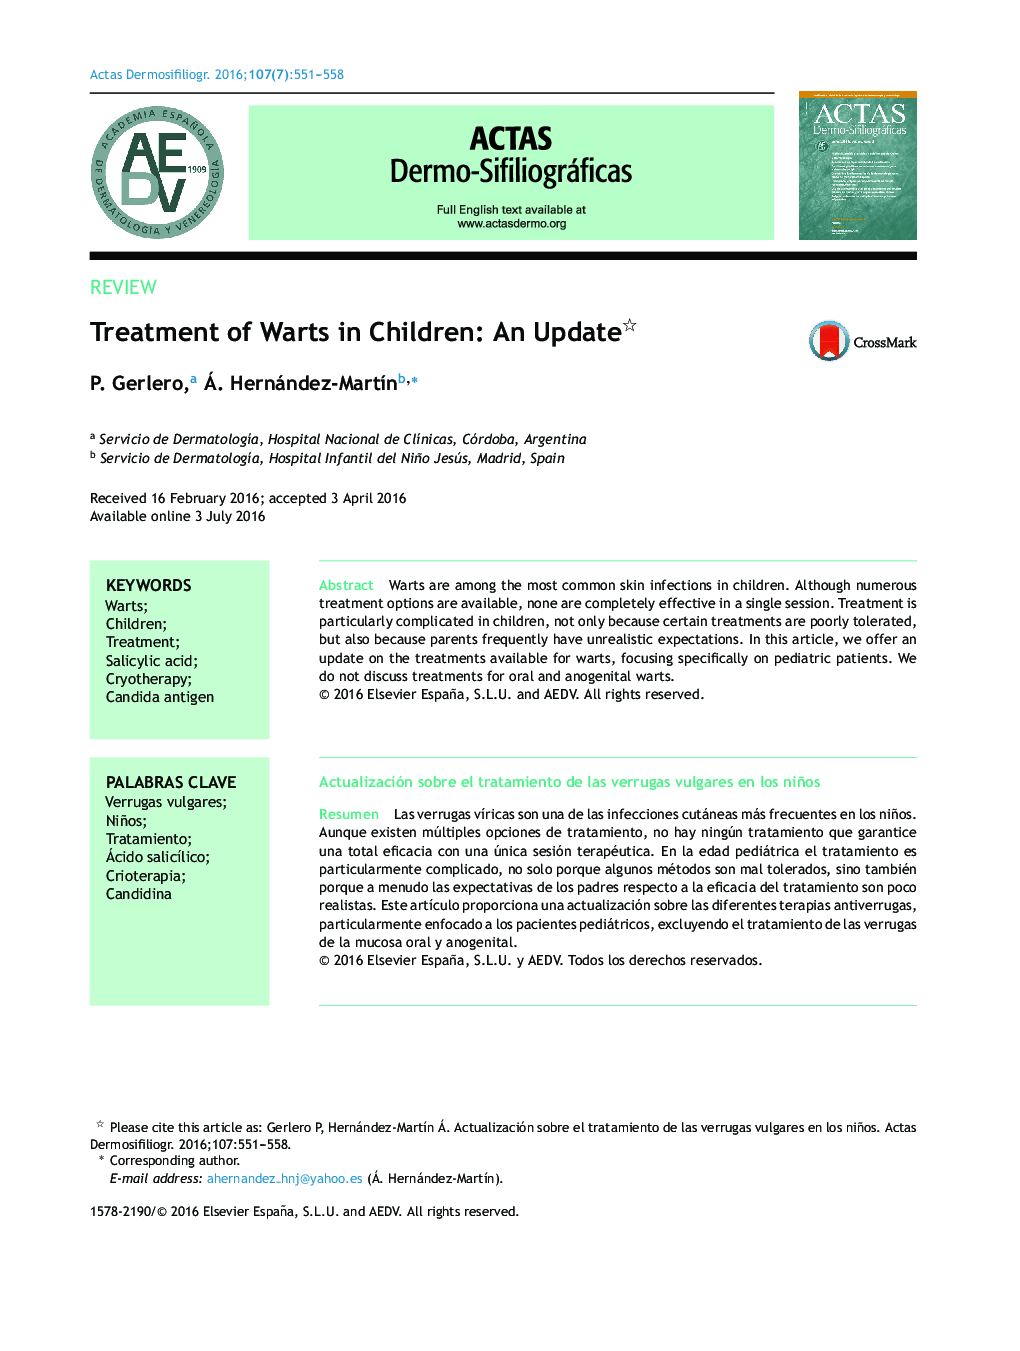 Treatment of Warts in Children: An Update 